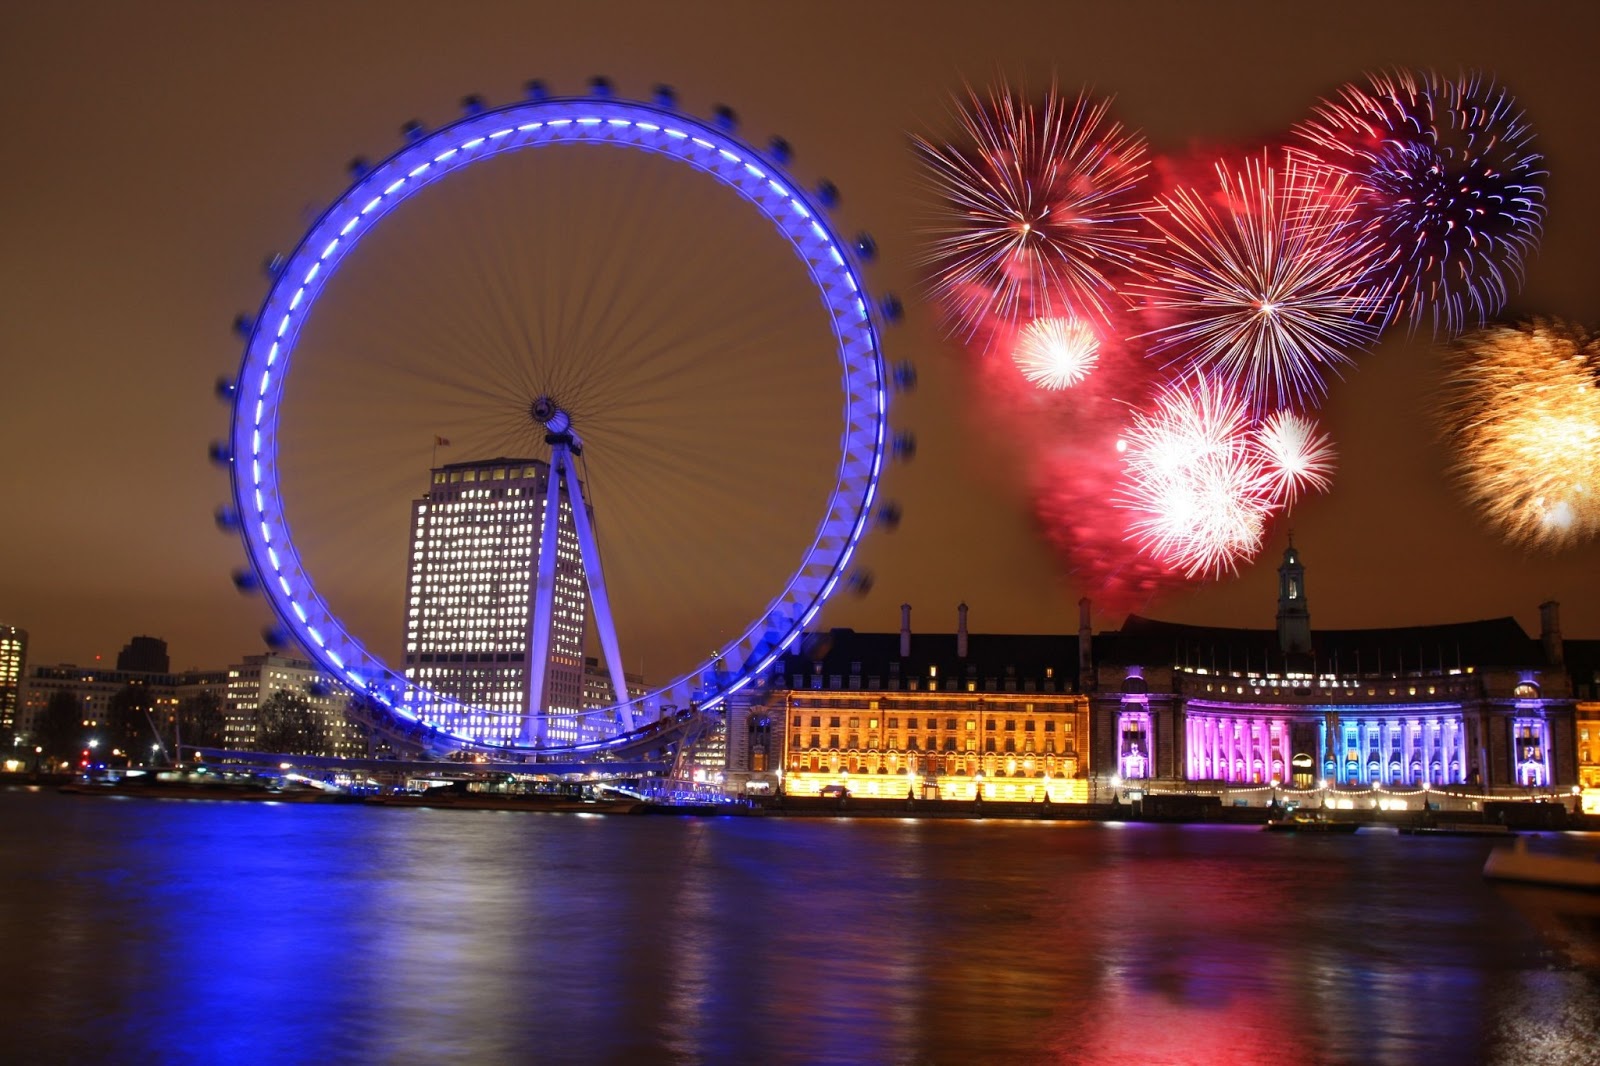 London Eye Night High Resolution Image 1080p